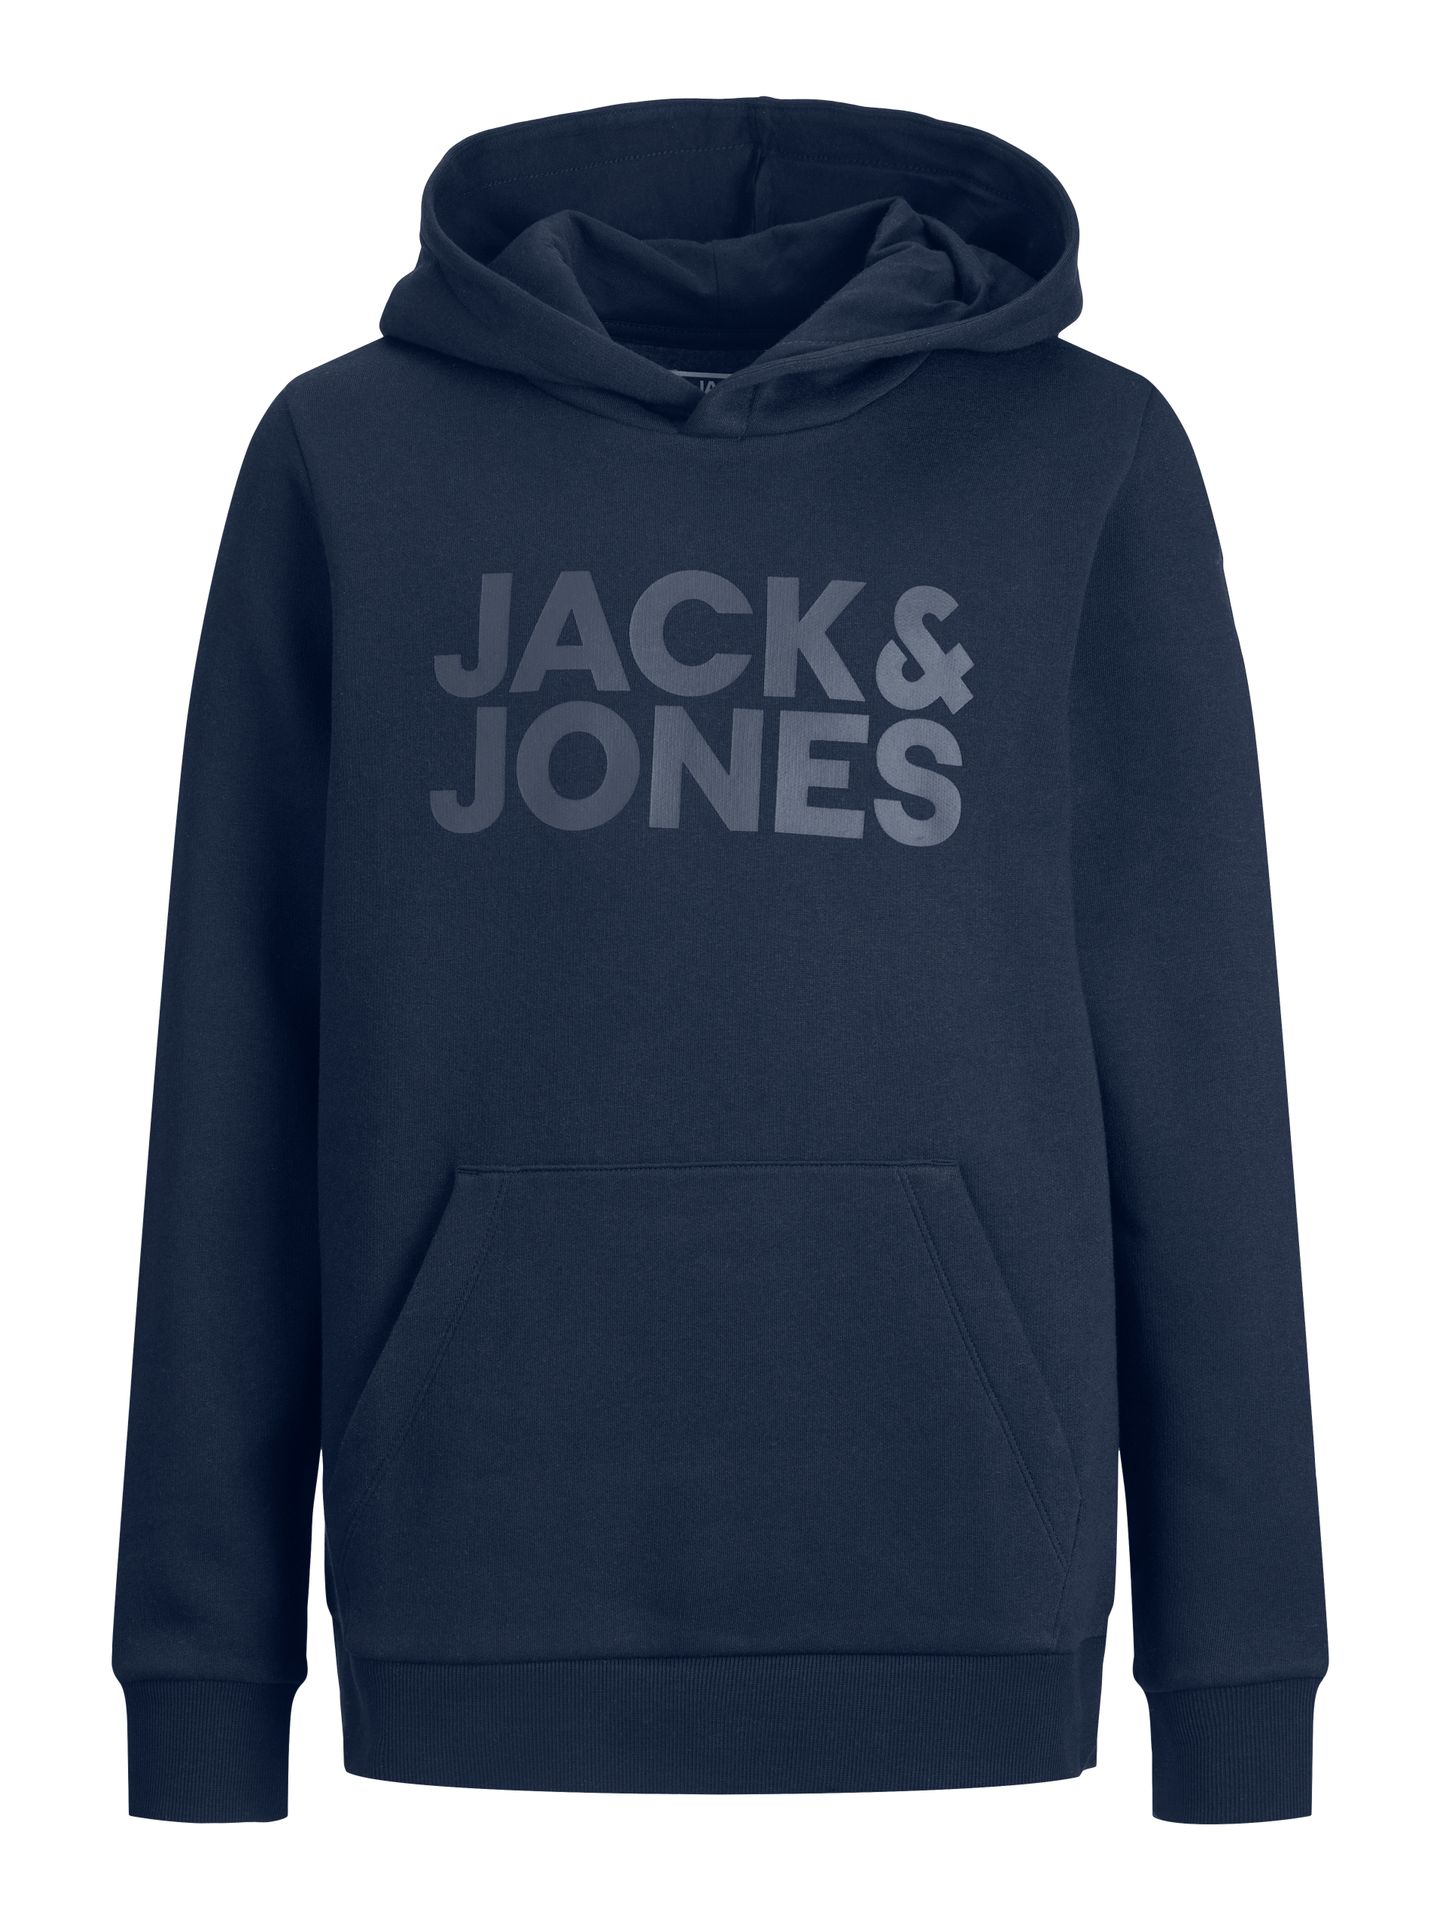 Jack & Jones JJECORP LOGO SWEAT HOOD NOOS JNR Navy Blazer/JR/Large Print/W. Navy 2900149533040